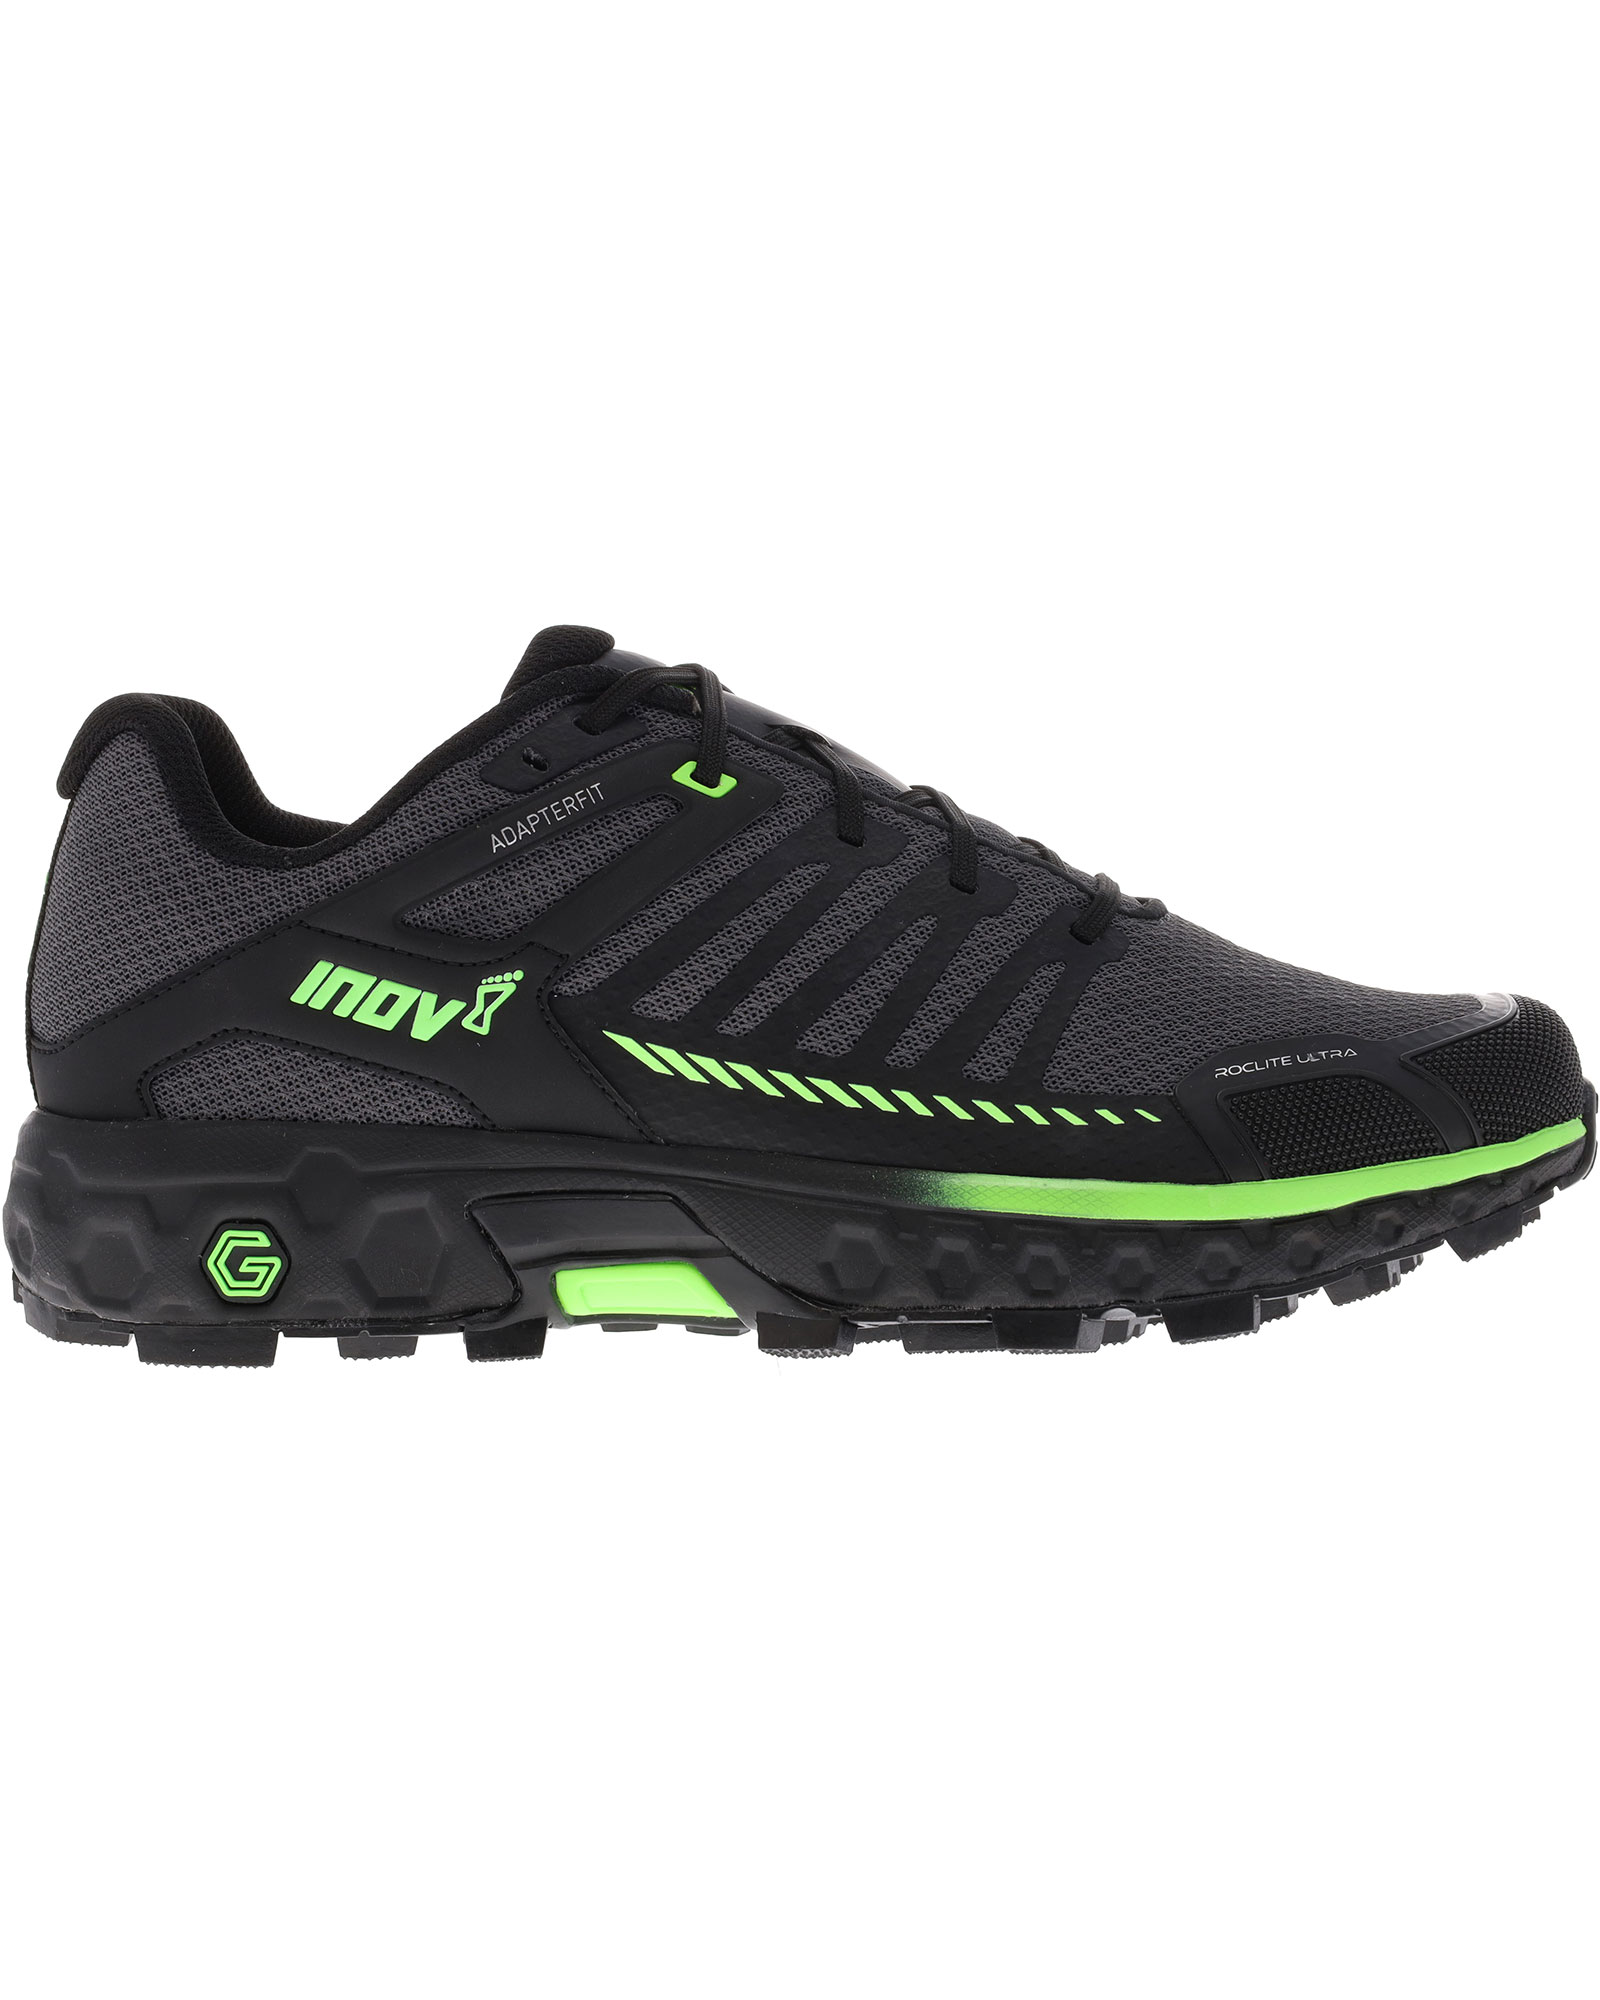 Inov 8 Roclite Ultra G 320 Men’s Shoes - Black/Green UK 7